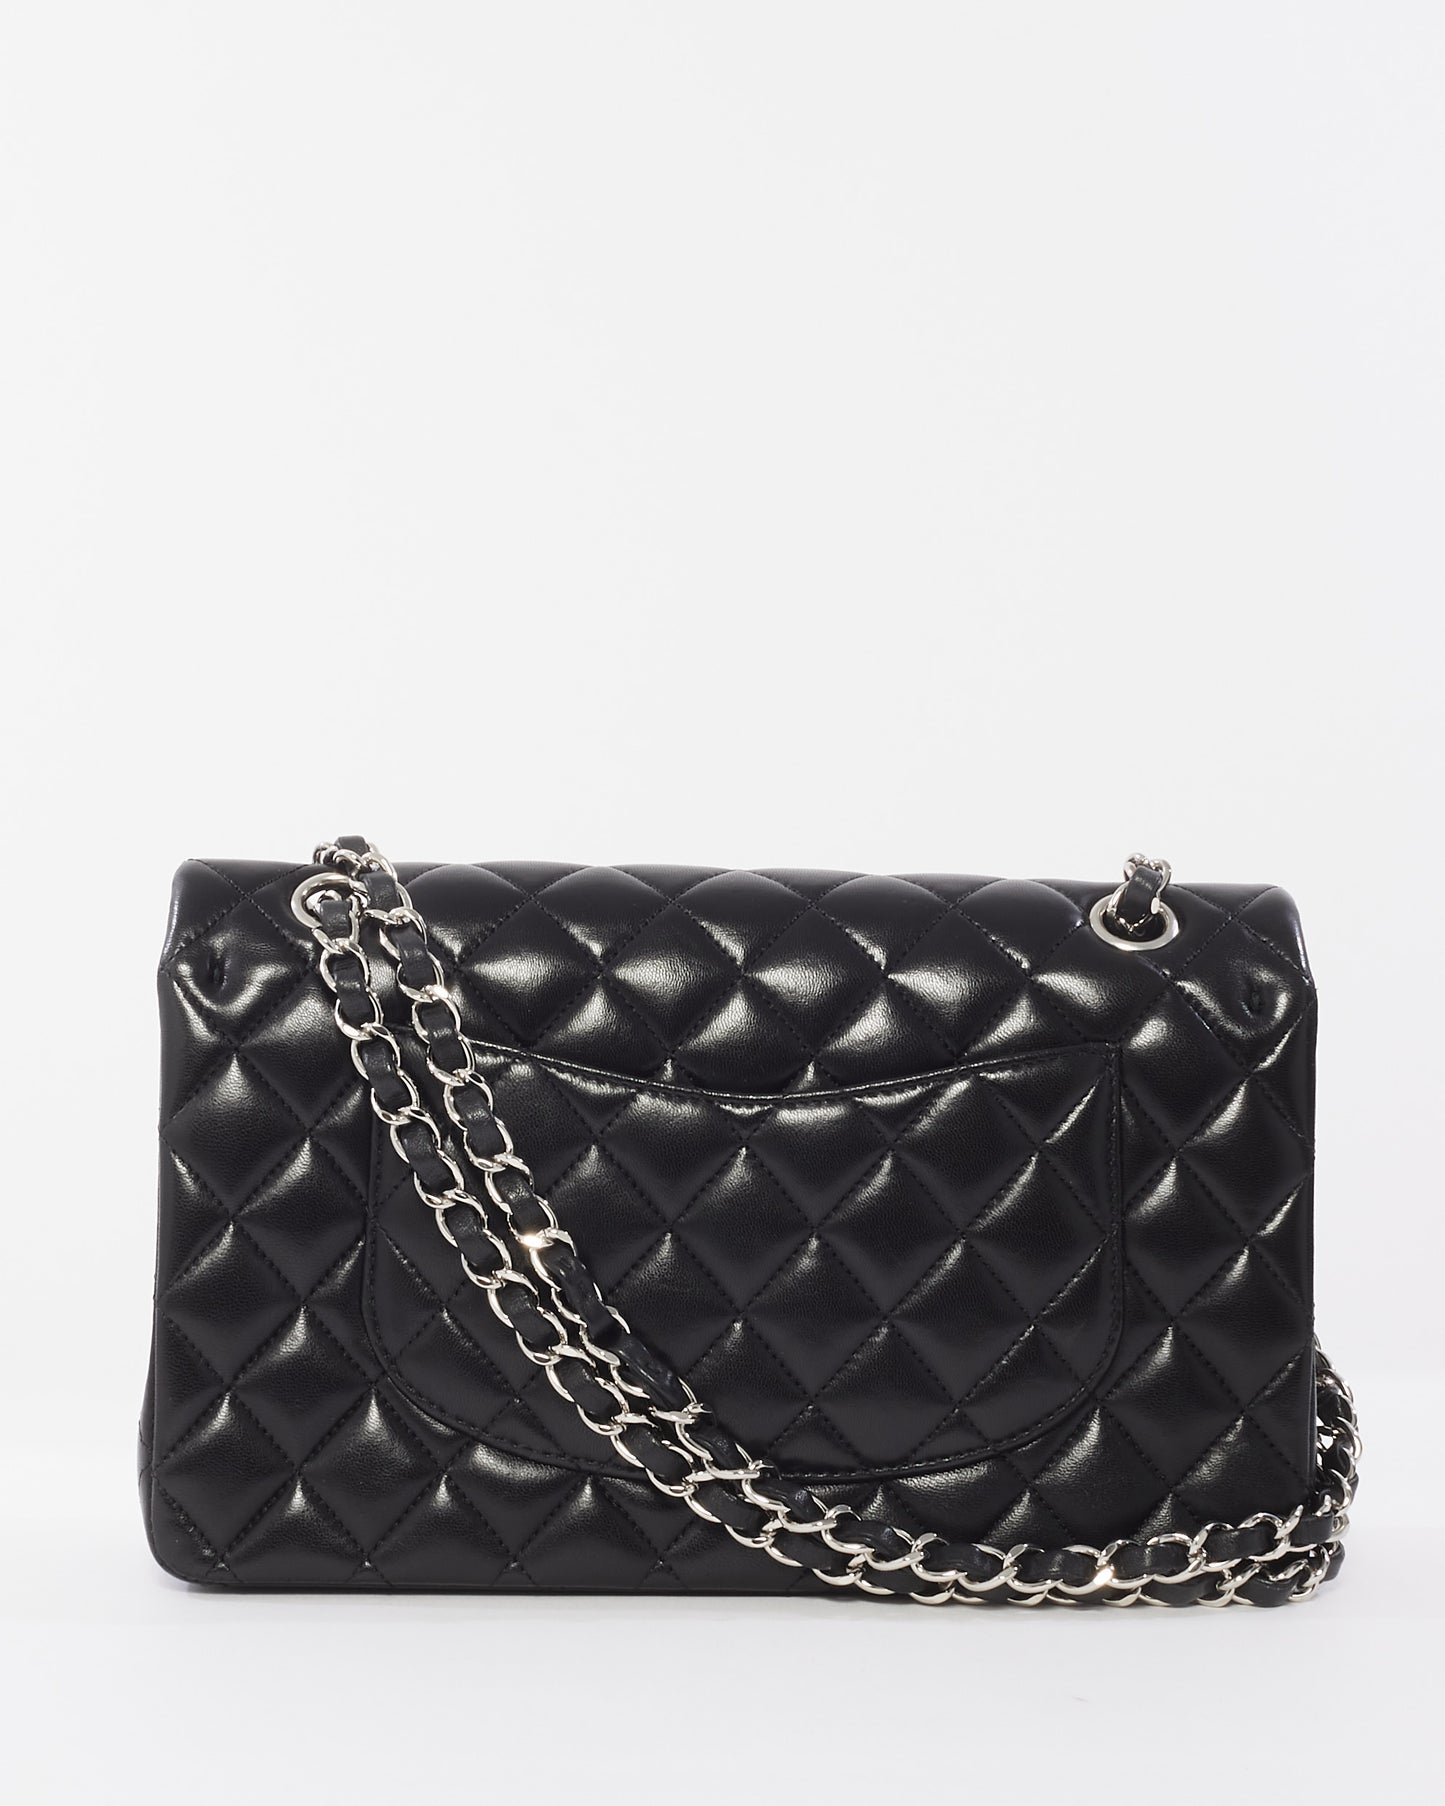 Chanel Black Lambskin Leather Medium Classic Double Flap Bag SHW